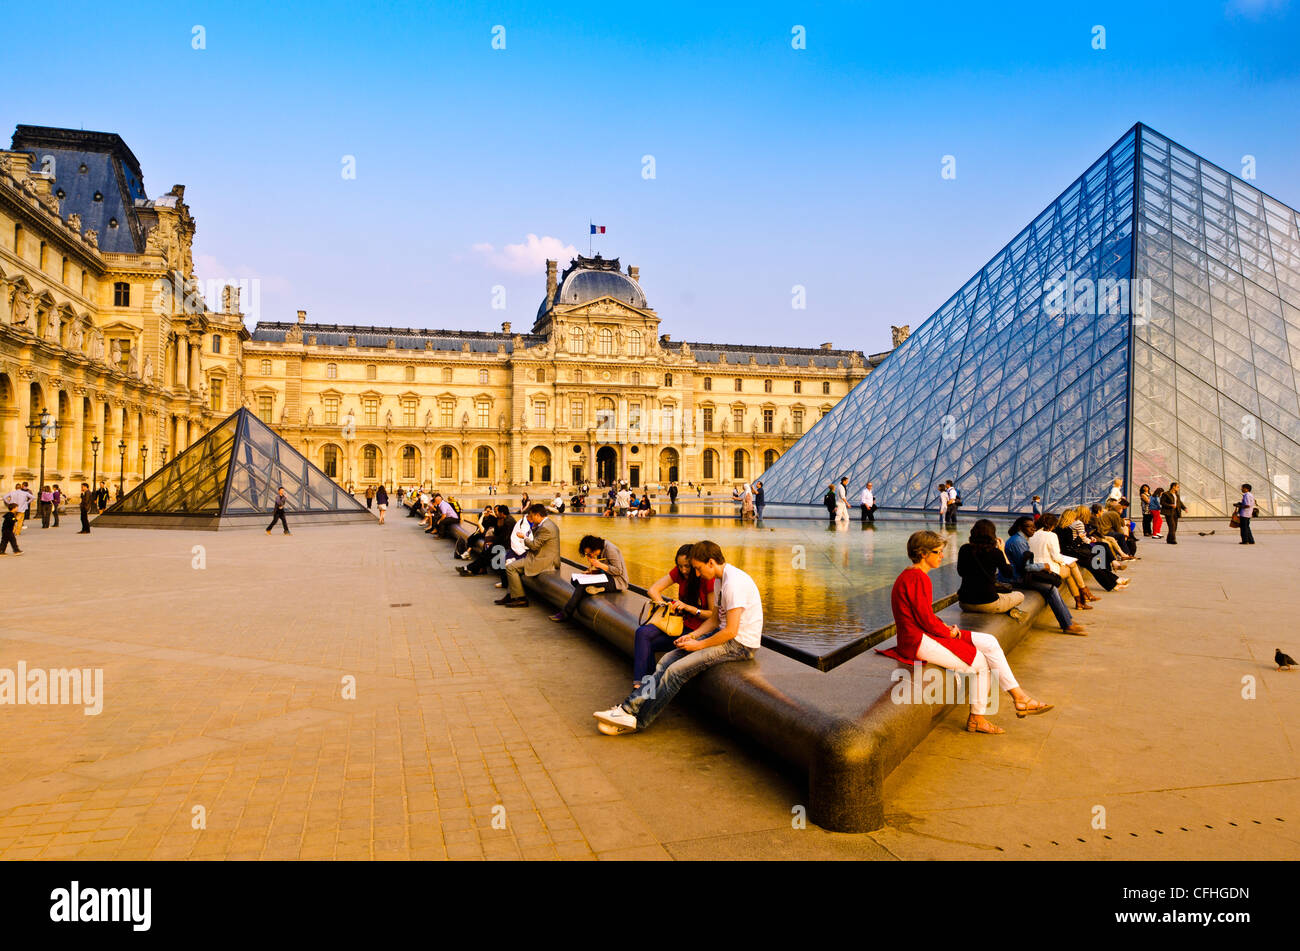 Pyramide und Besucher bei der Louvre-Palast, Louvre-Museum, Paris, France Stockfoto